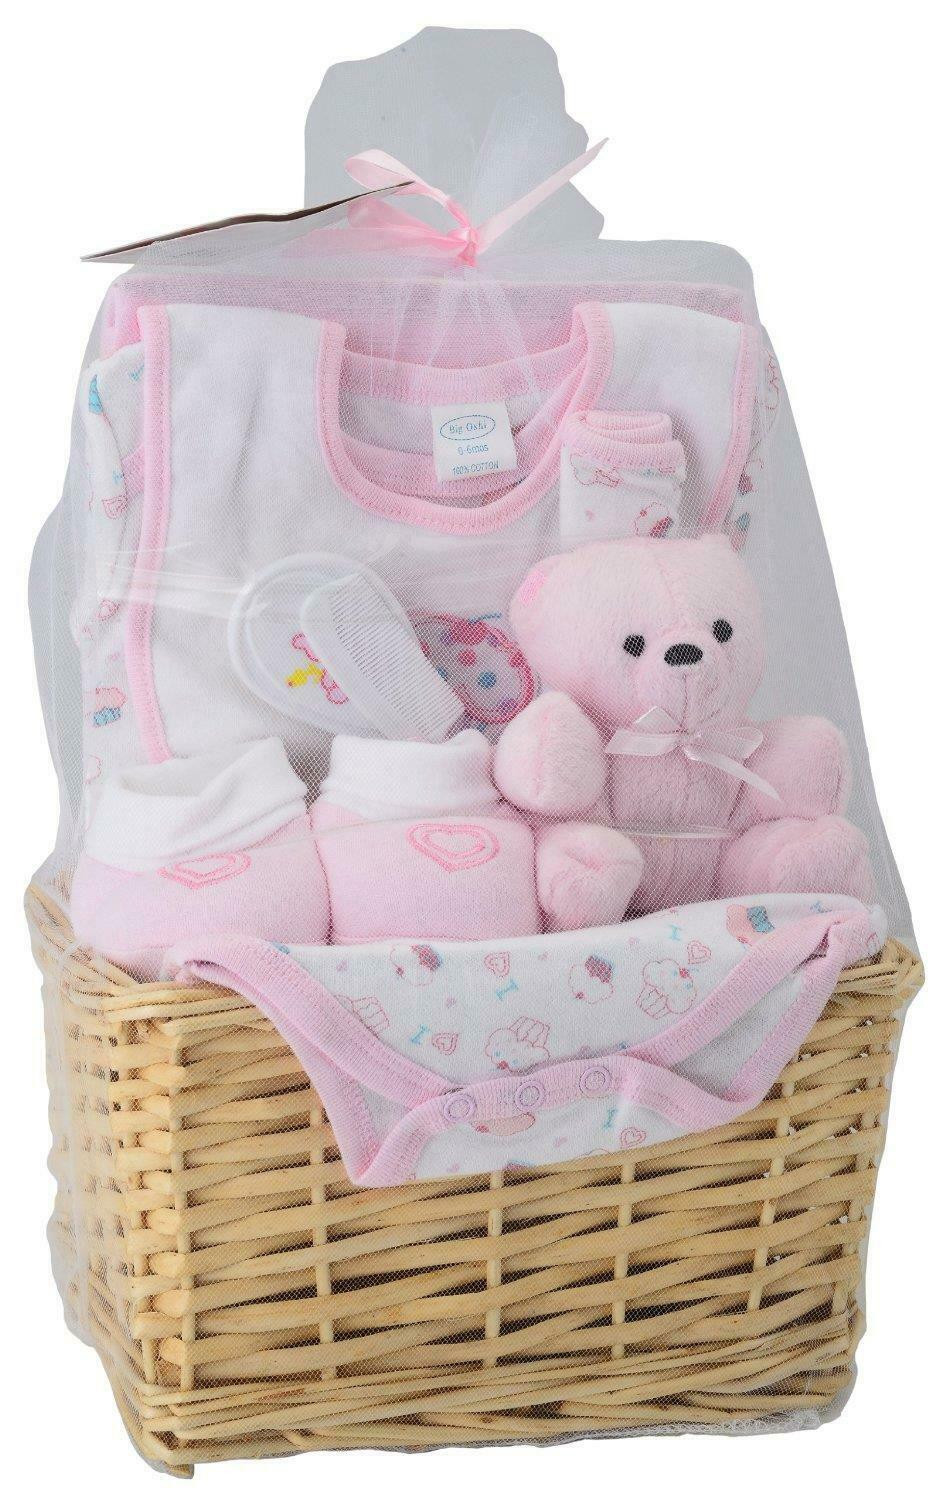 Baby Basket Gift Set
 Big Oshi Baby Essentials 9 Piece Layette Basket Gift Set